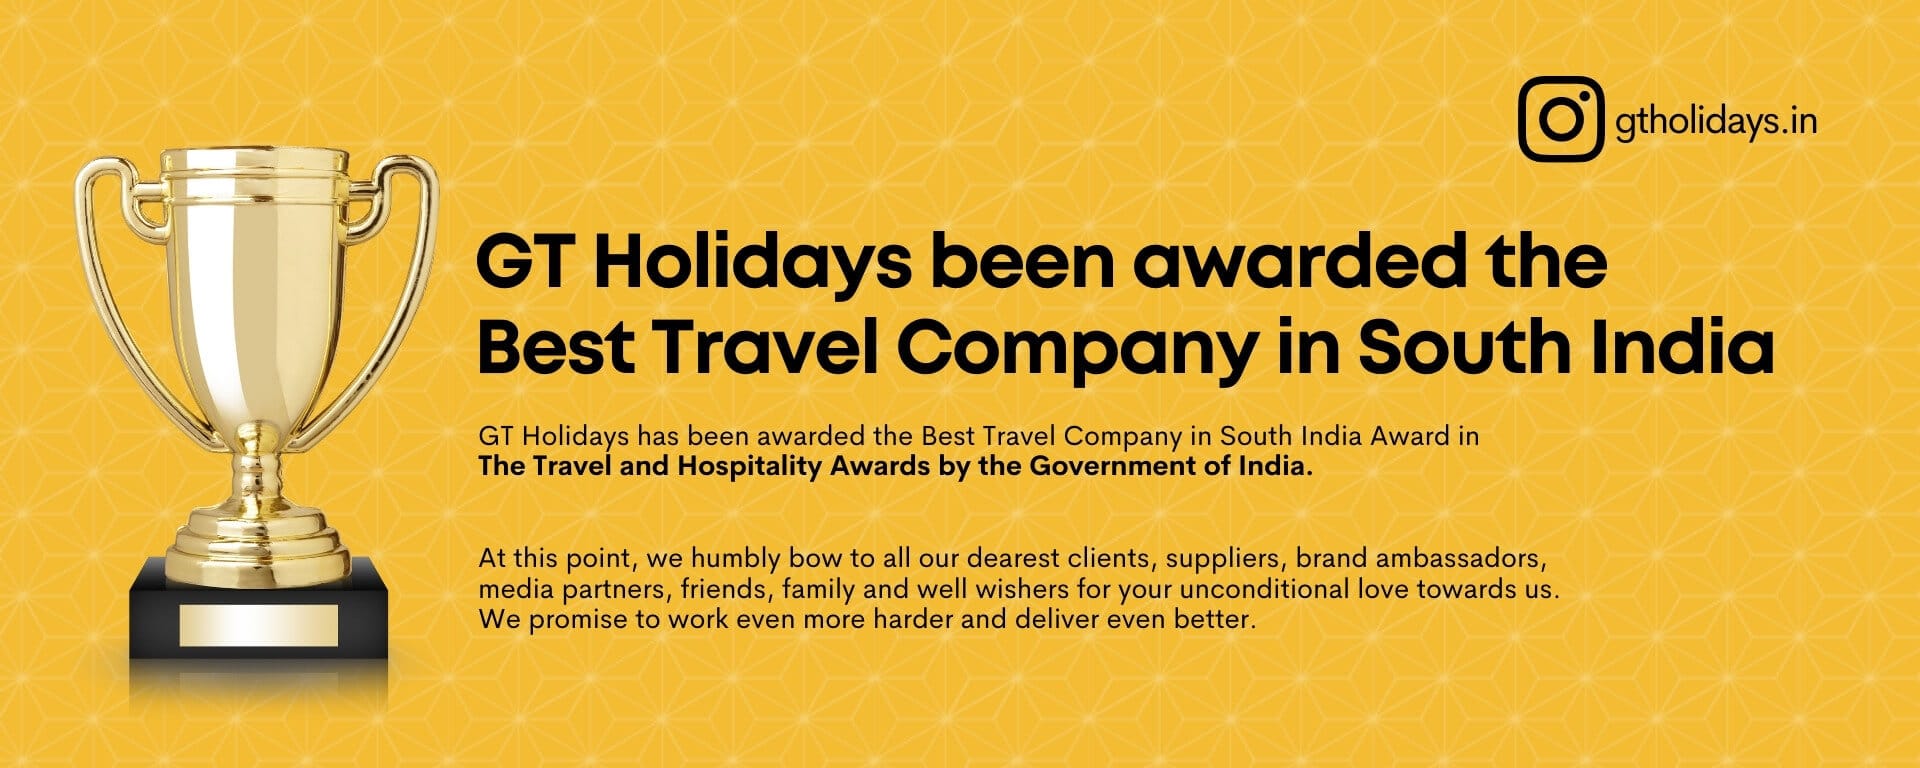 travel company holidays reviews